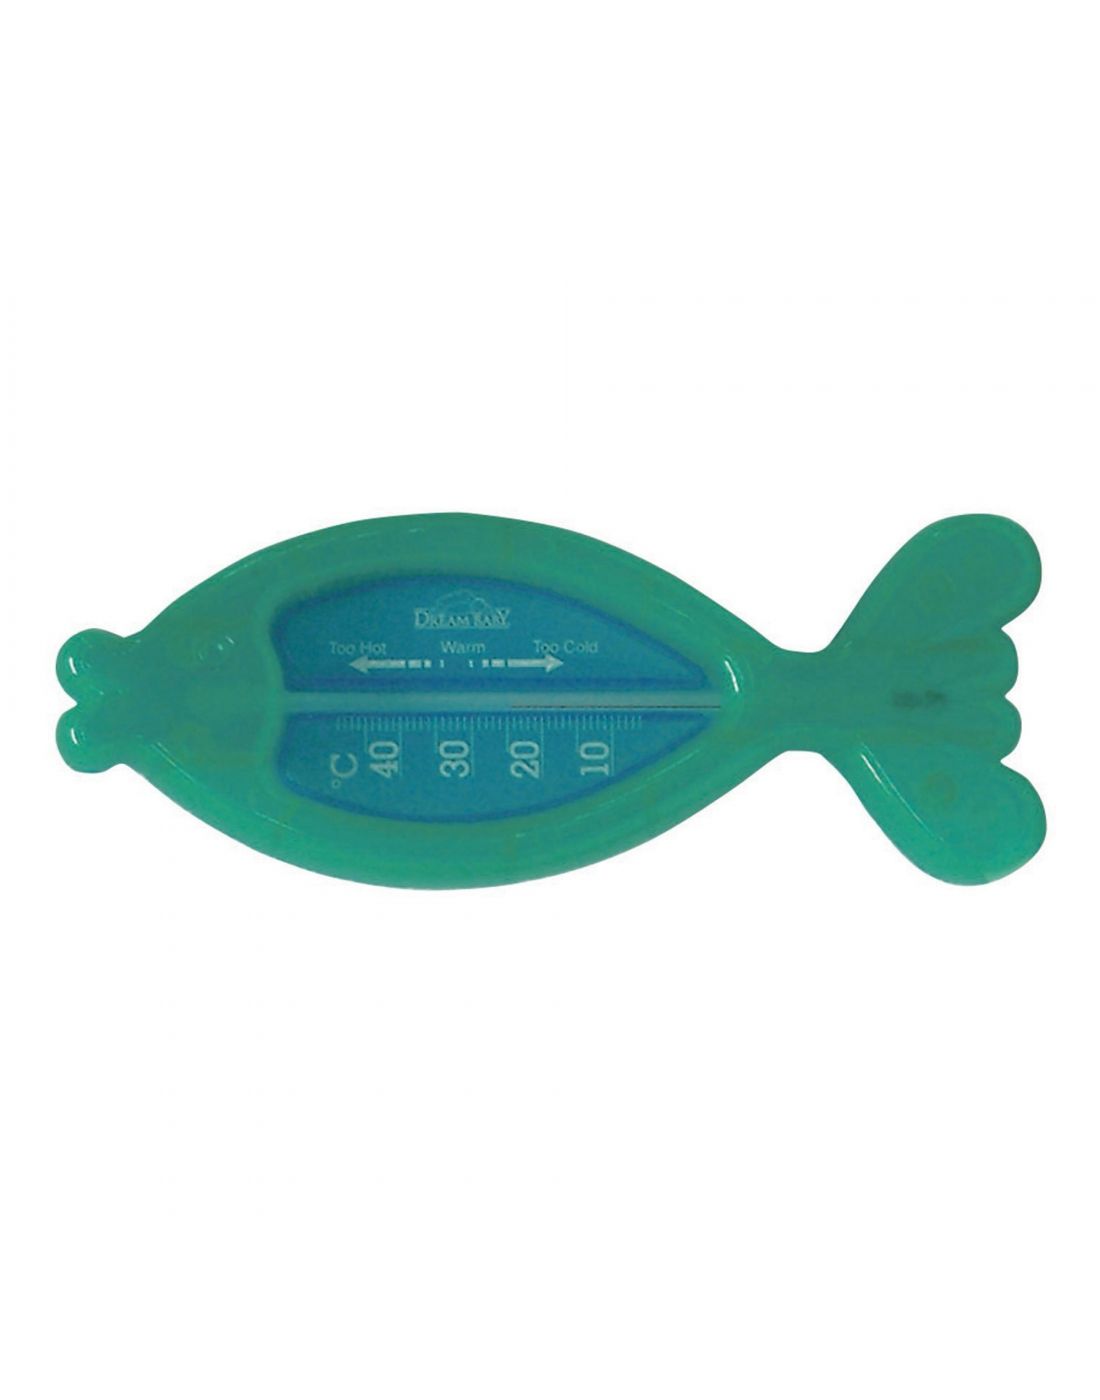 DreamBaby Kids Bath Thermometer Fish